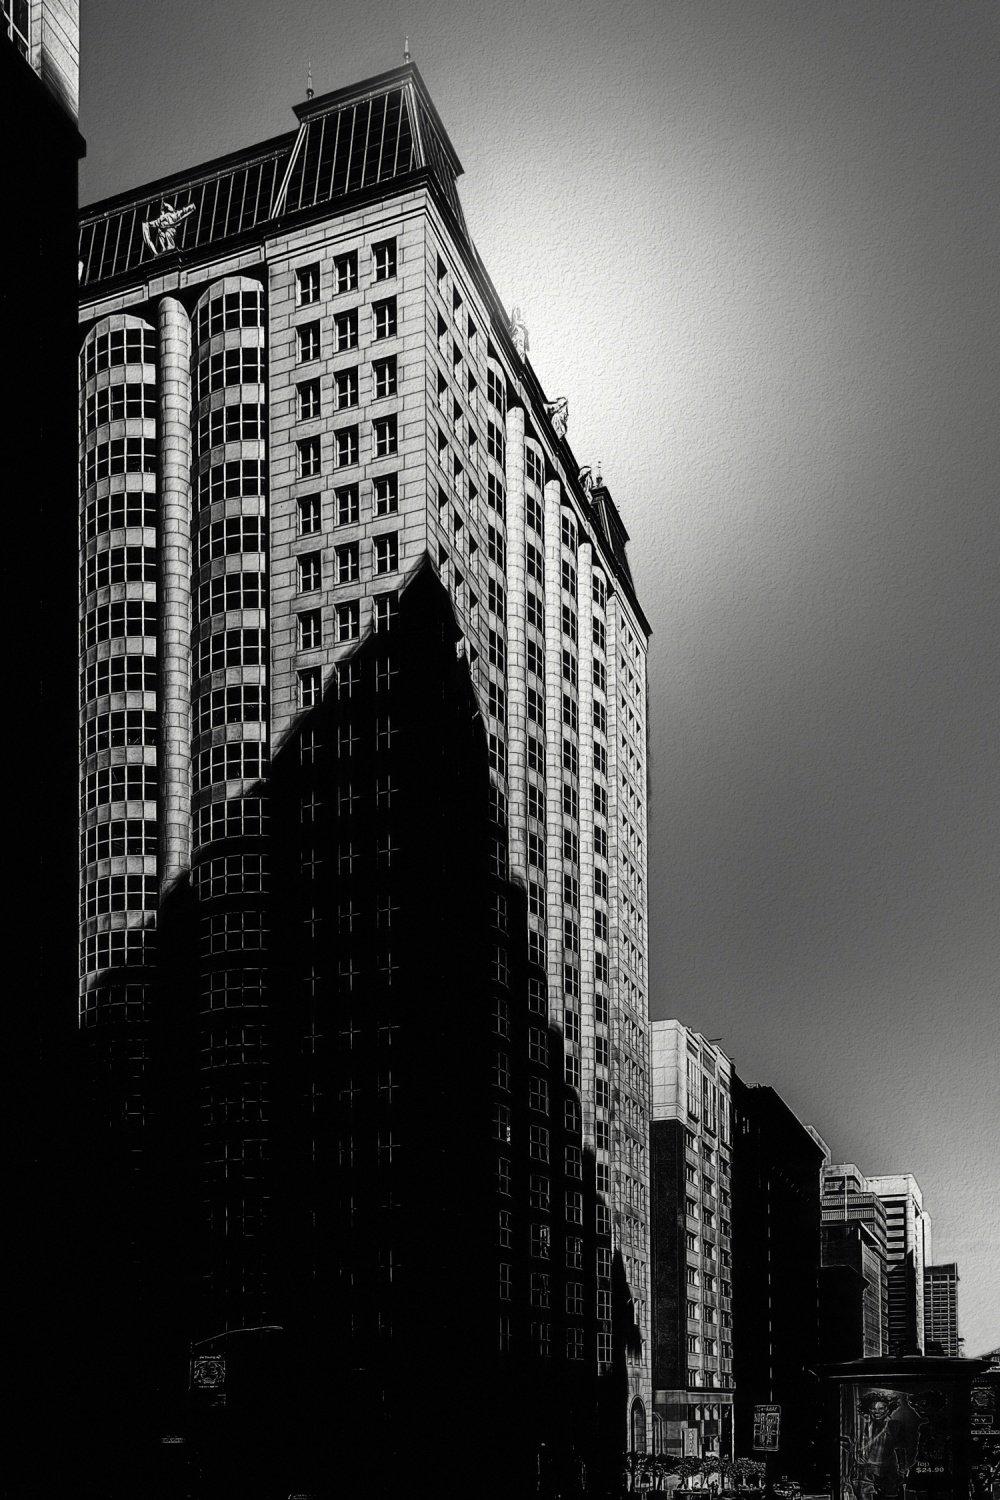 Erik Brede Photography - Streets of San Francisco